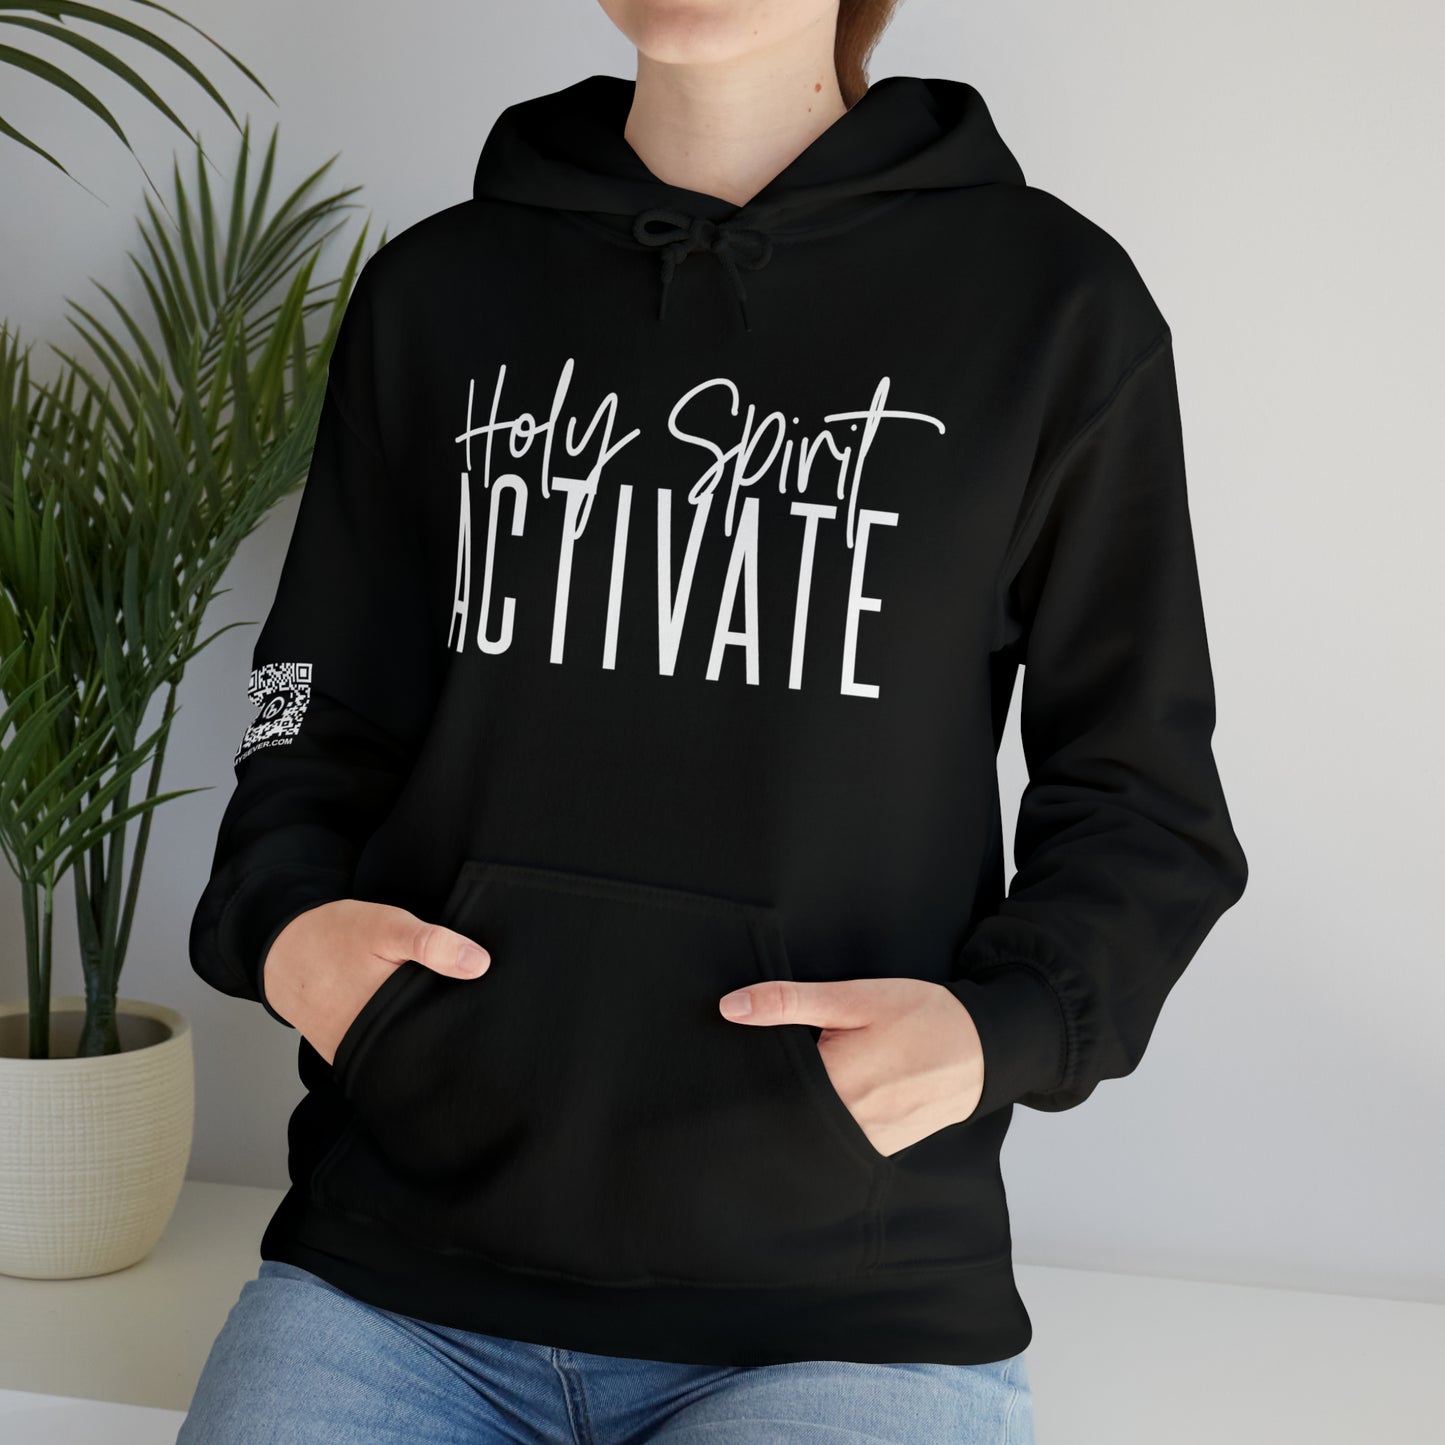 Holy Spirit Activate Unisex Heavy Blend™ Hooded Sweatshirt